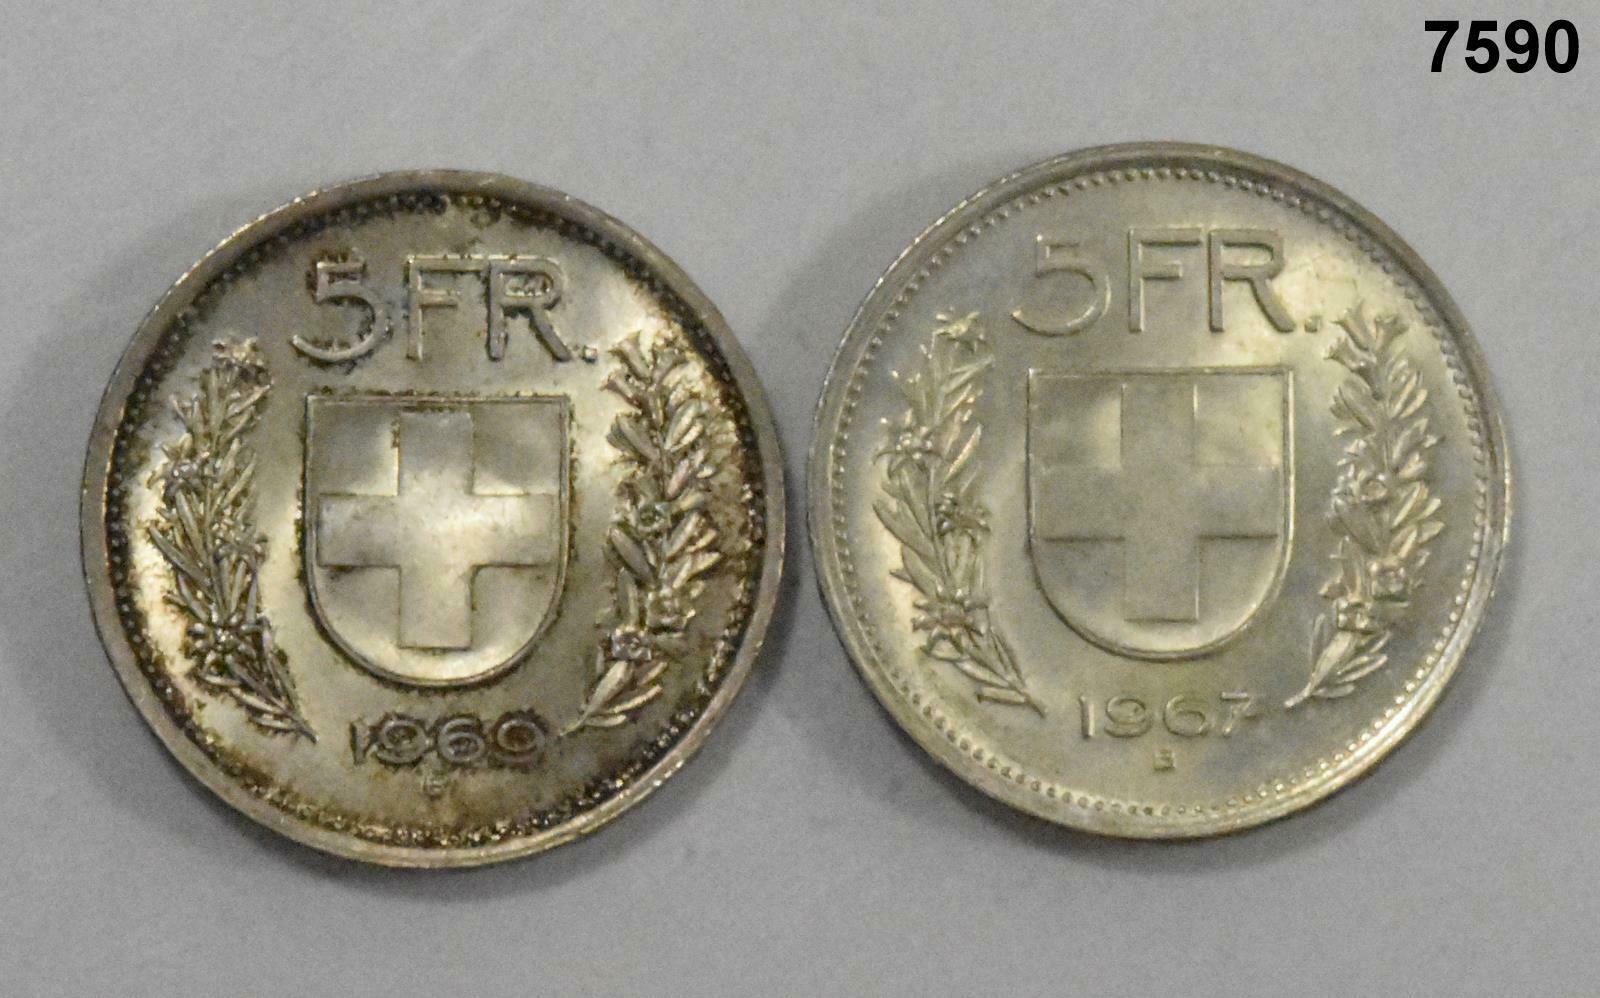 SWISS 1967 & 1969 2 COIN 5 FRANC SET BOTH BU!! #7590